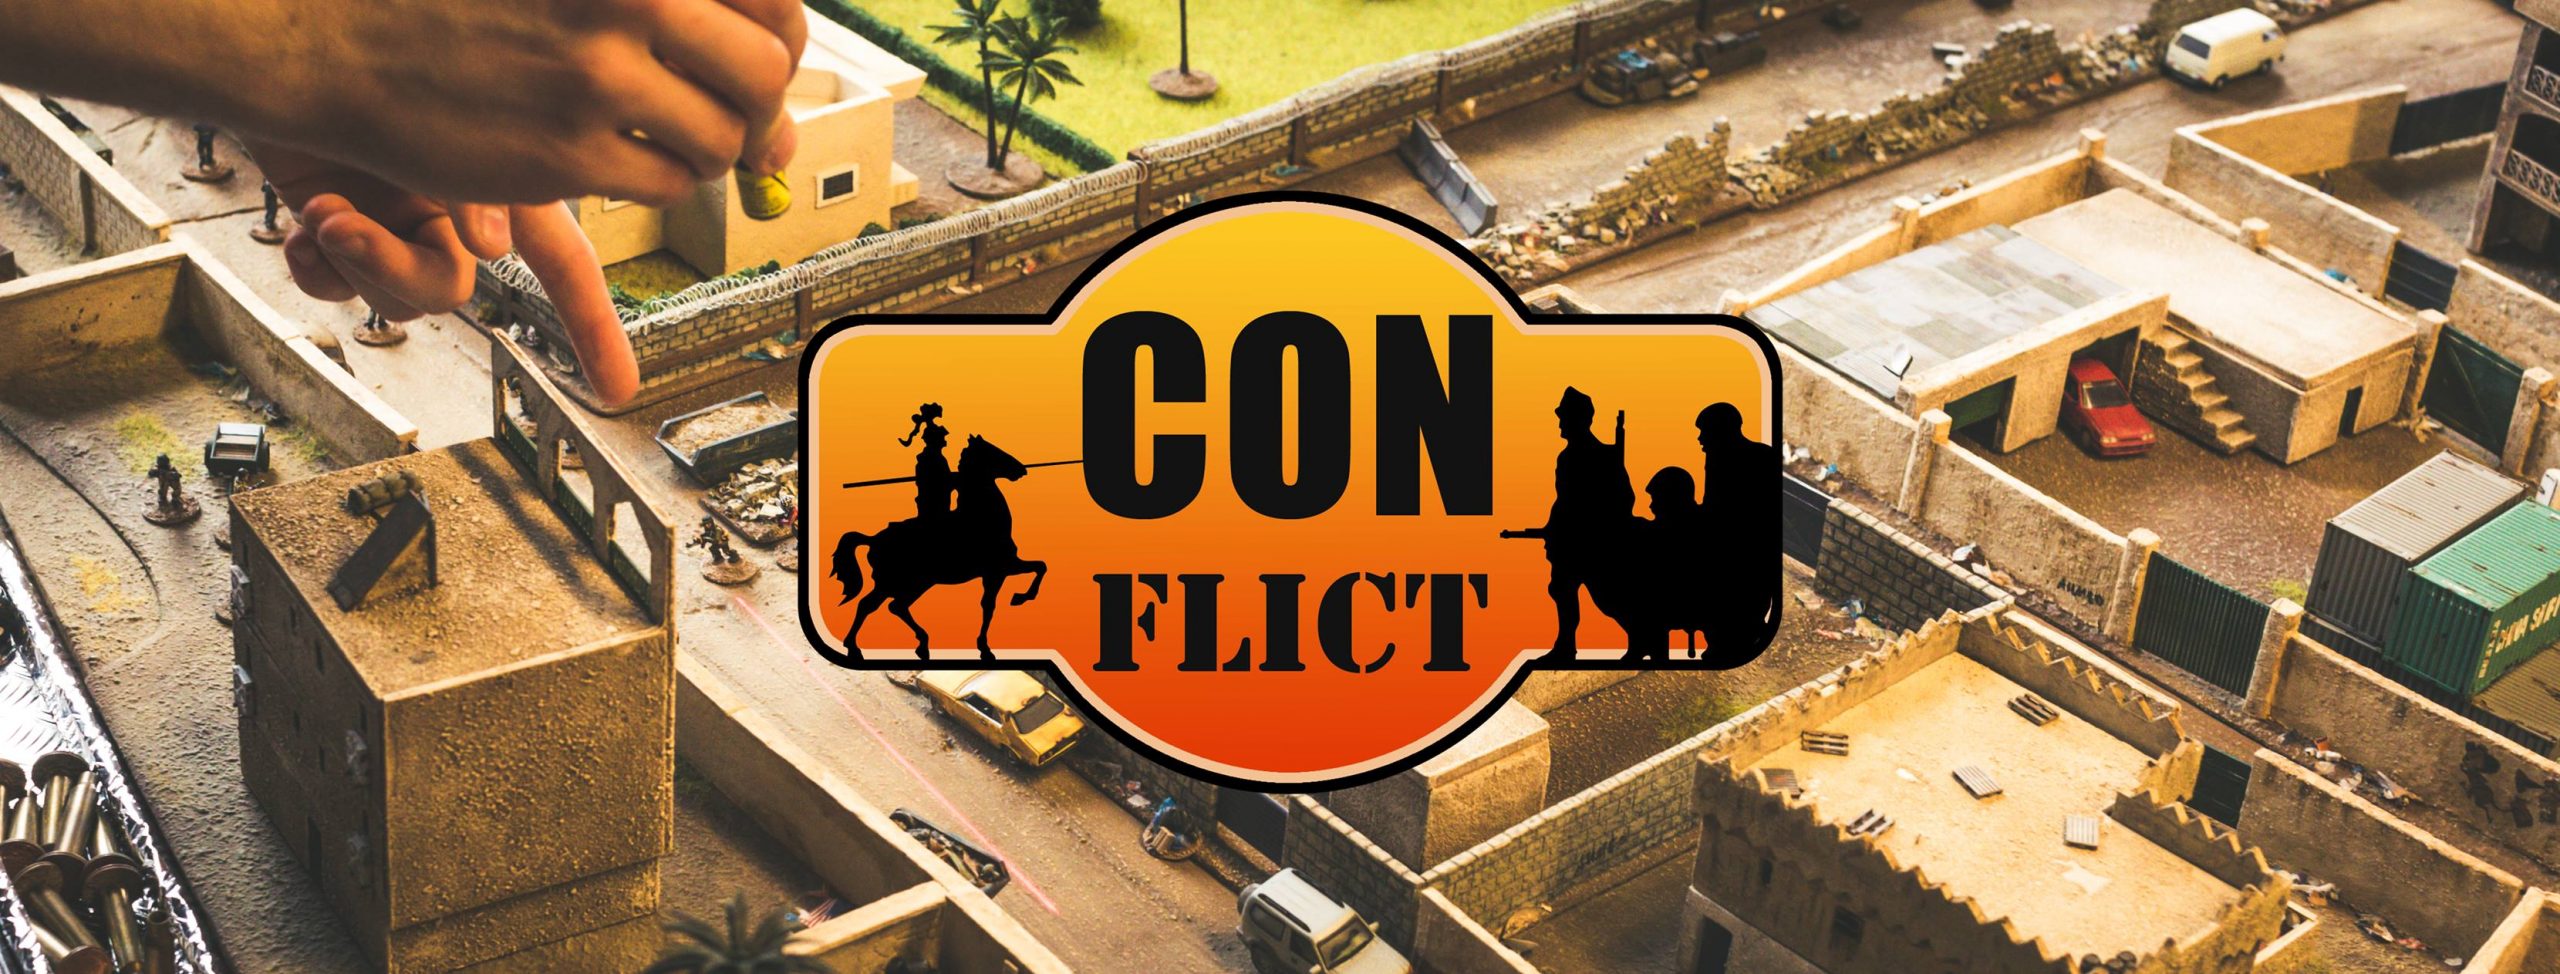 CONflict - Wargame und Tabletop Convention